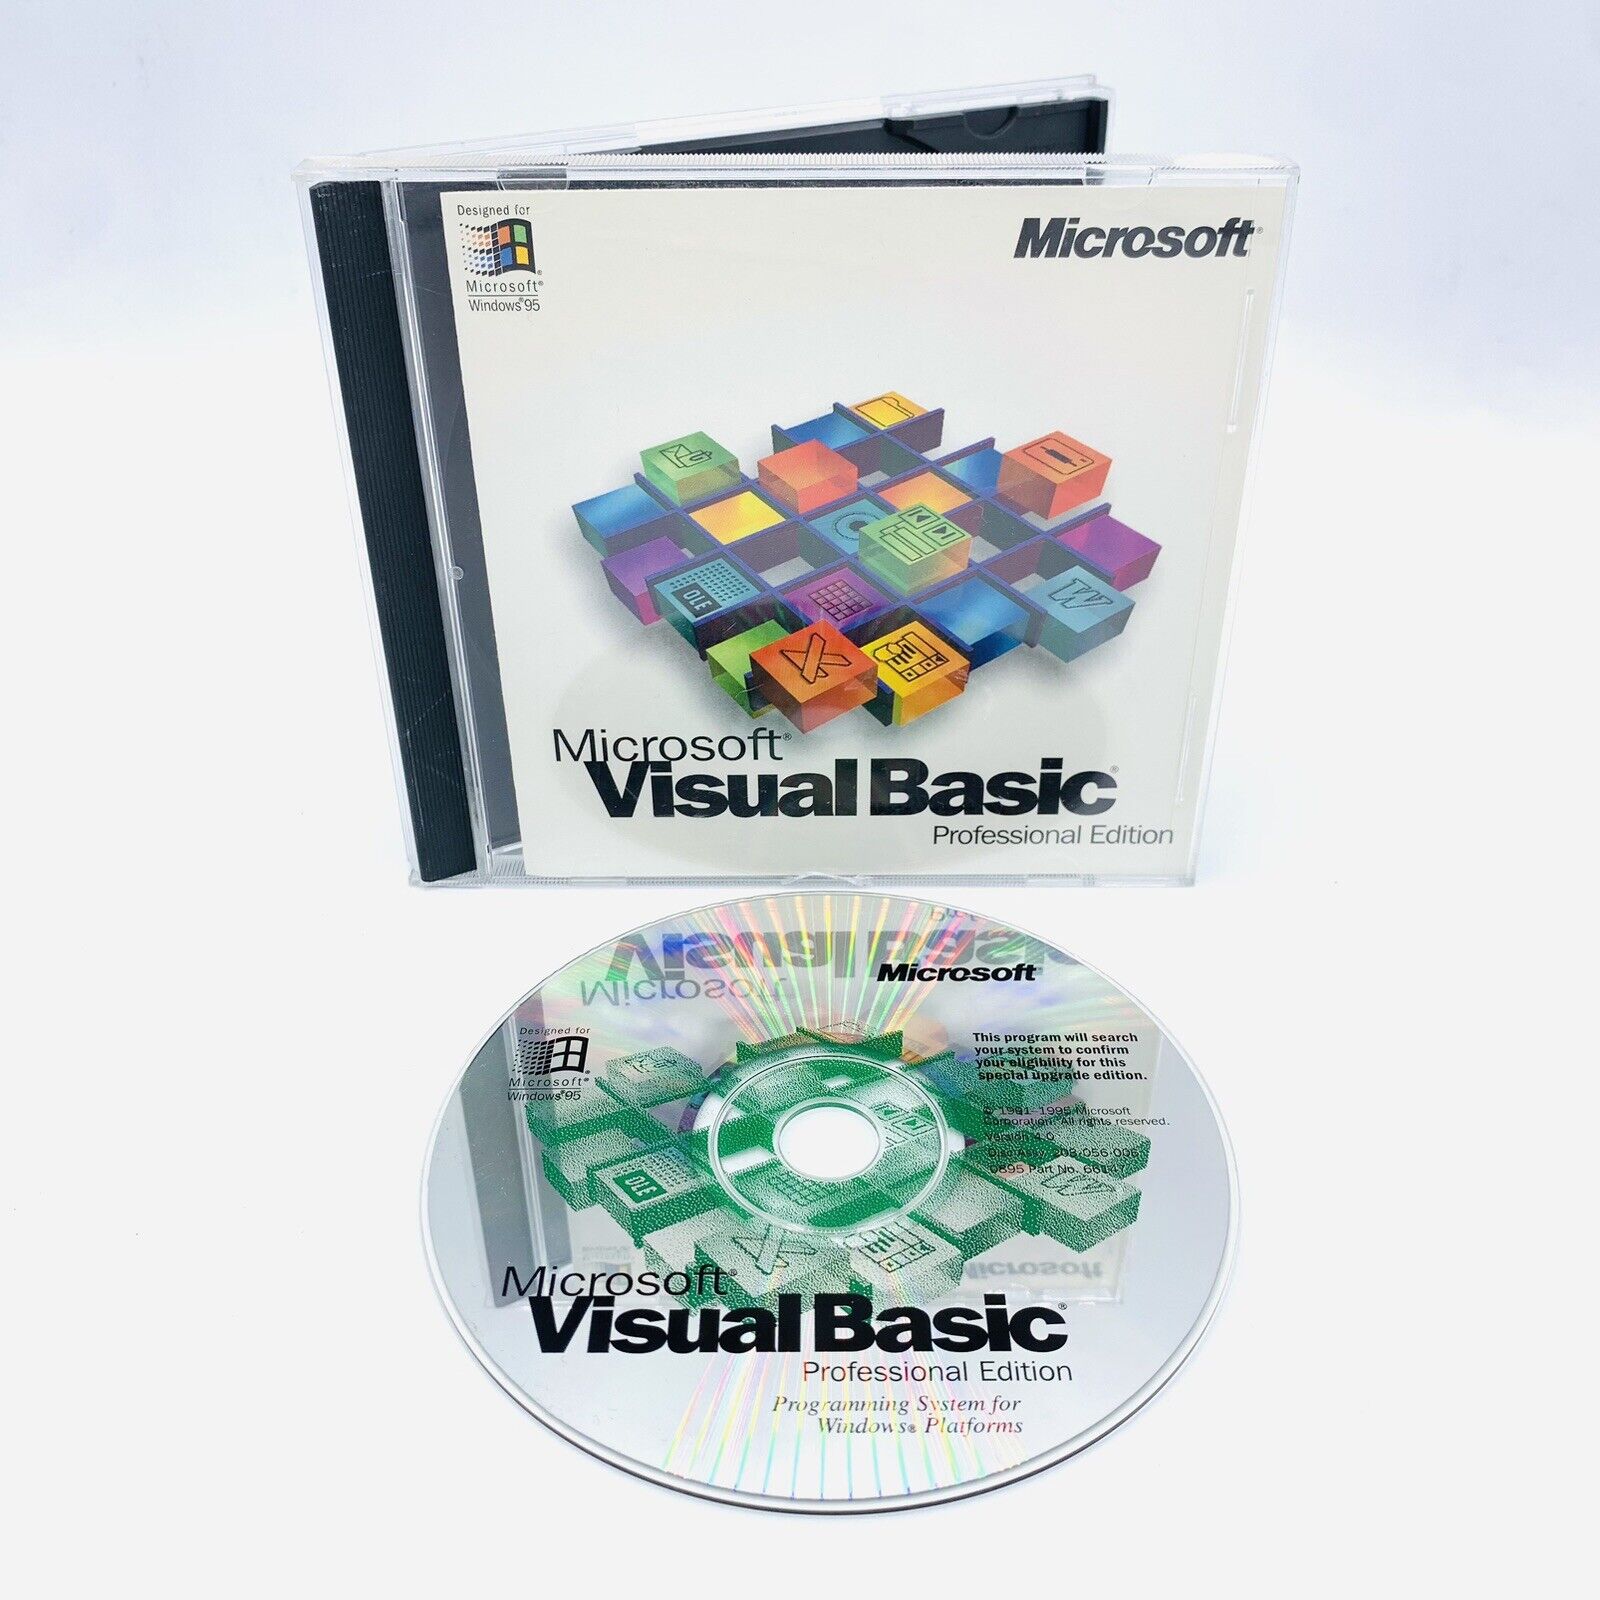 Microsoft Visual Basic 4.0 Professional Edition w/ CD Key, Tested Fast 